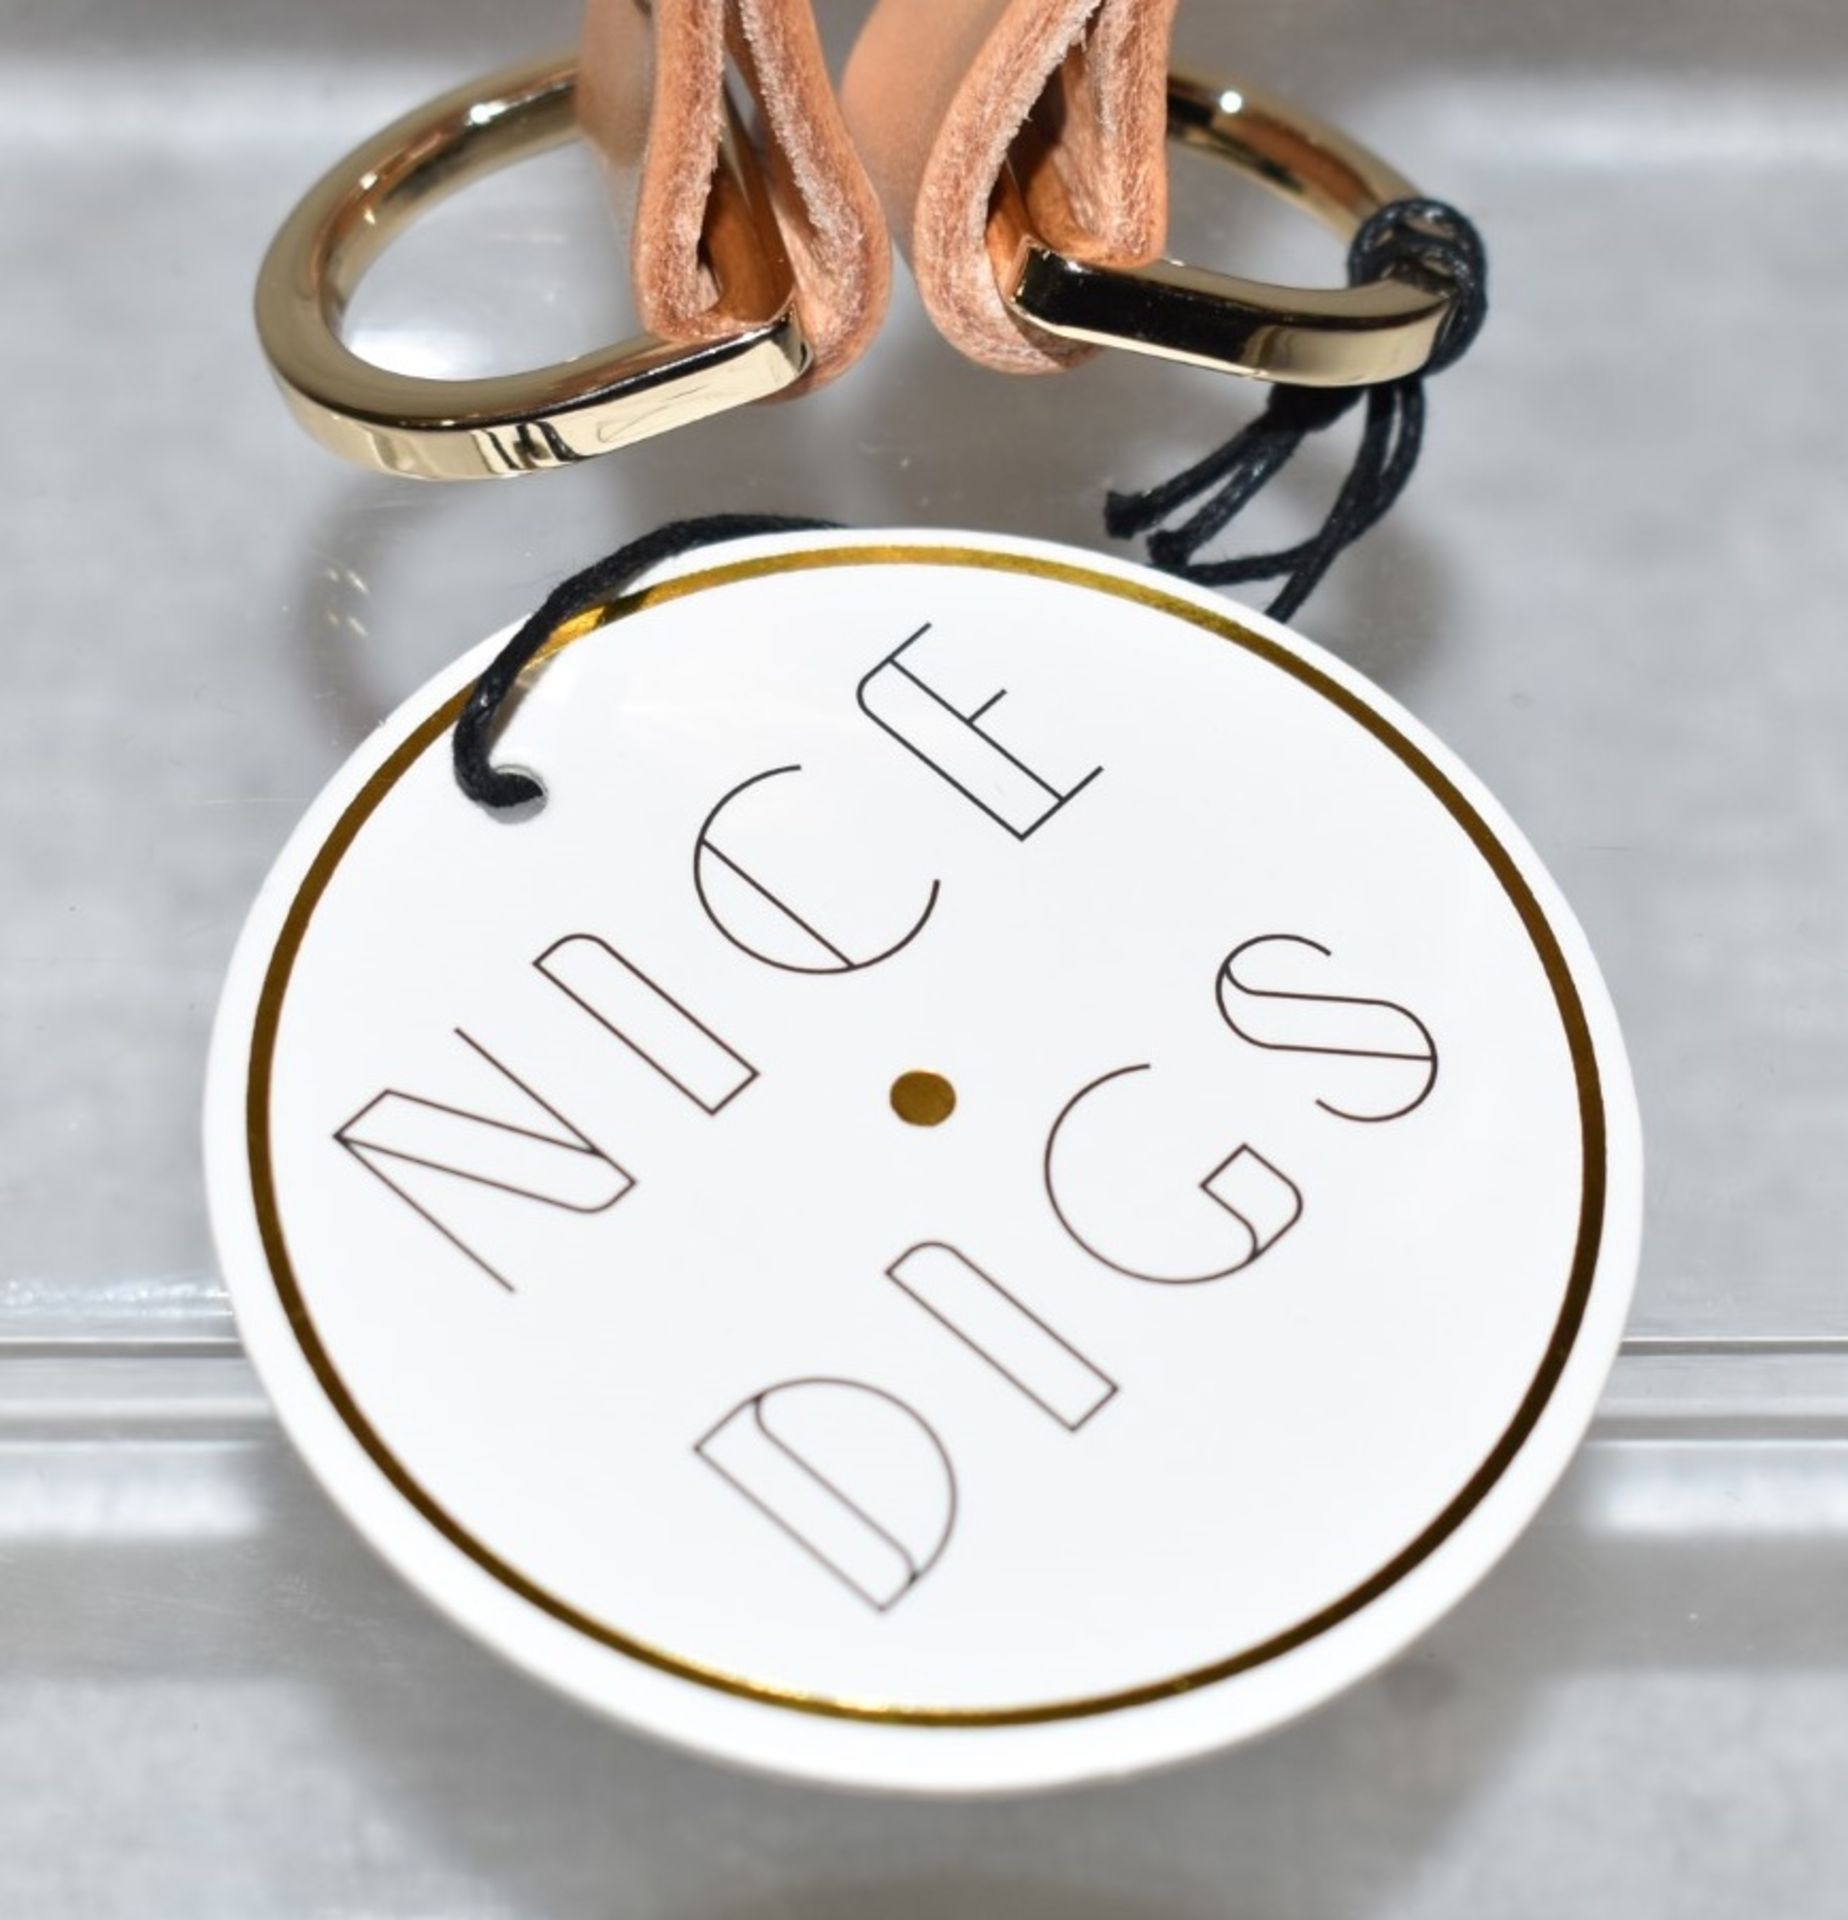 1 x NICE DIGS Spike Memphis Leather Dog Harness (Medium) - Original Price £67.95 - Image 3 of 6